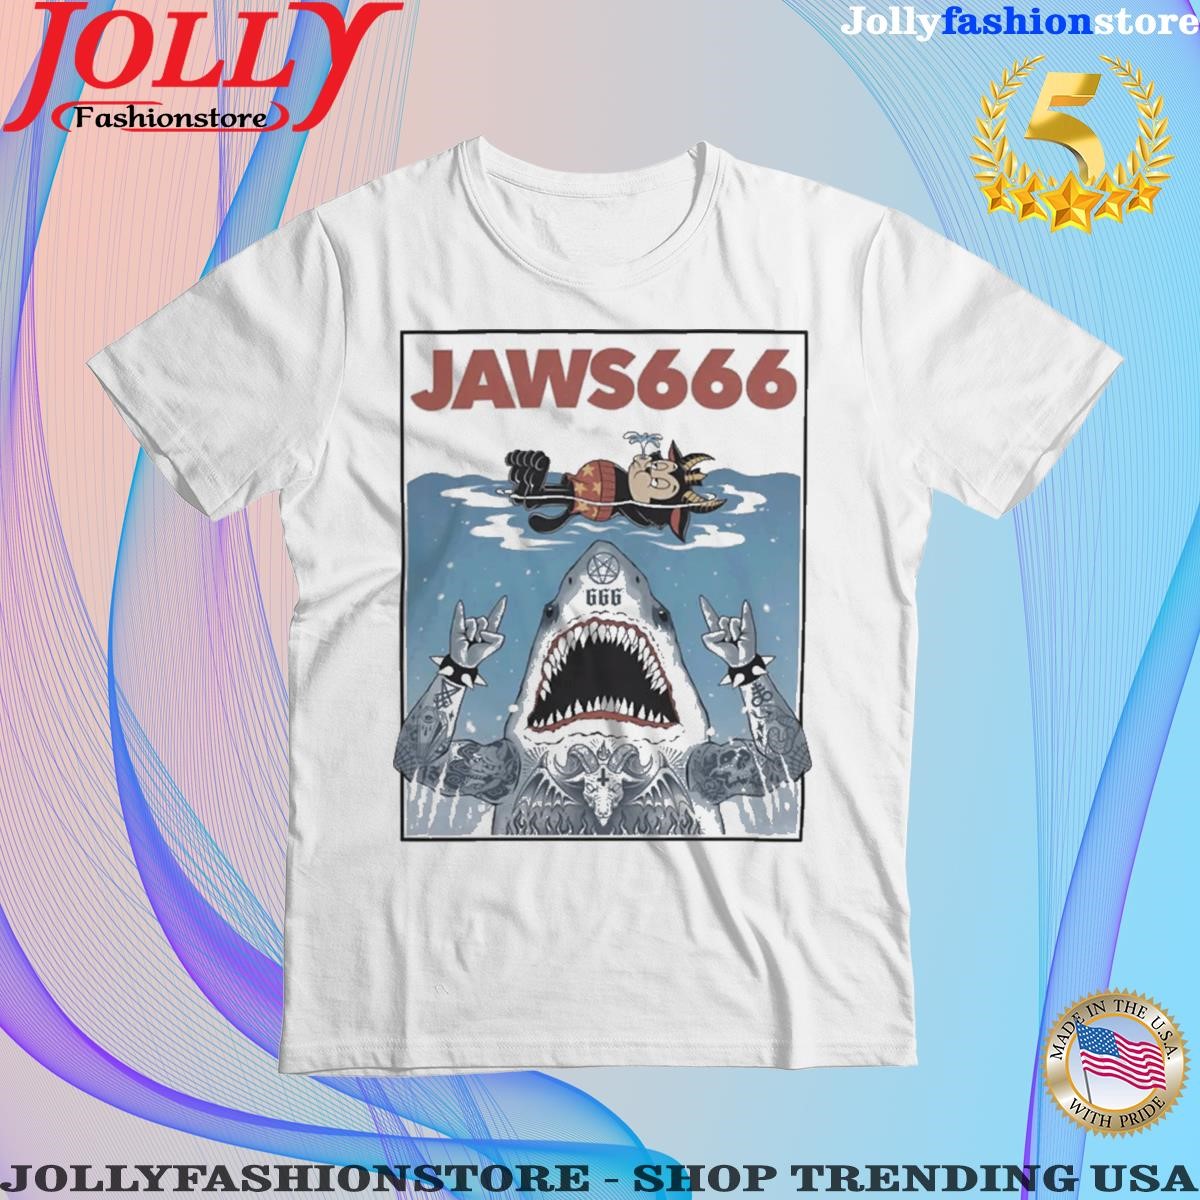 Xtreme Merch Jaws666 Shirt